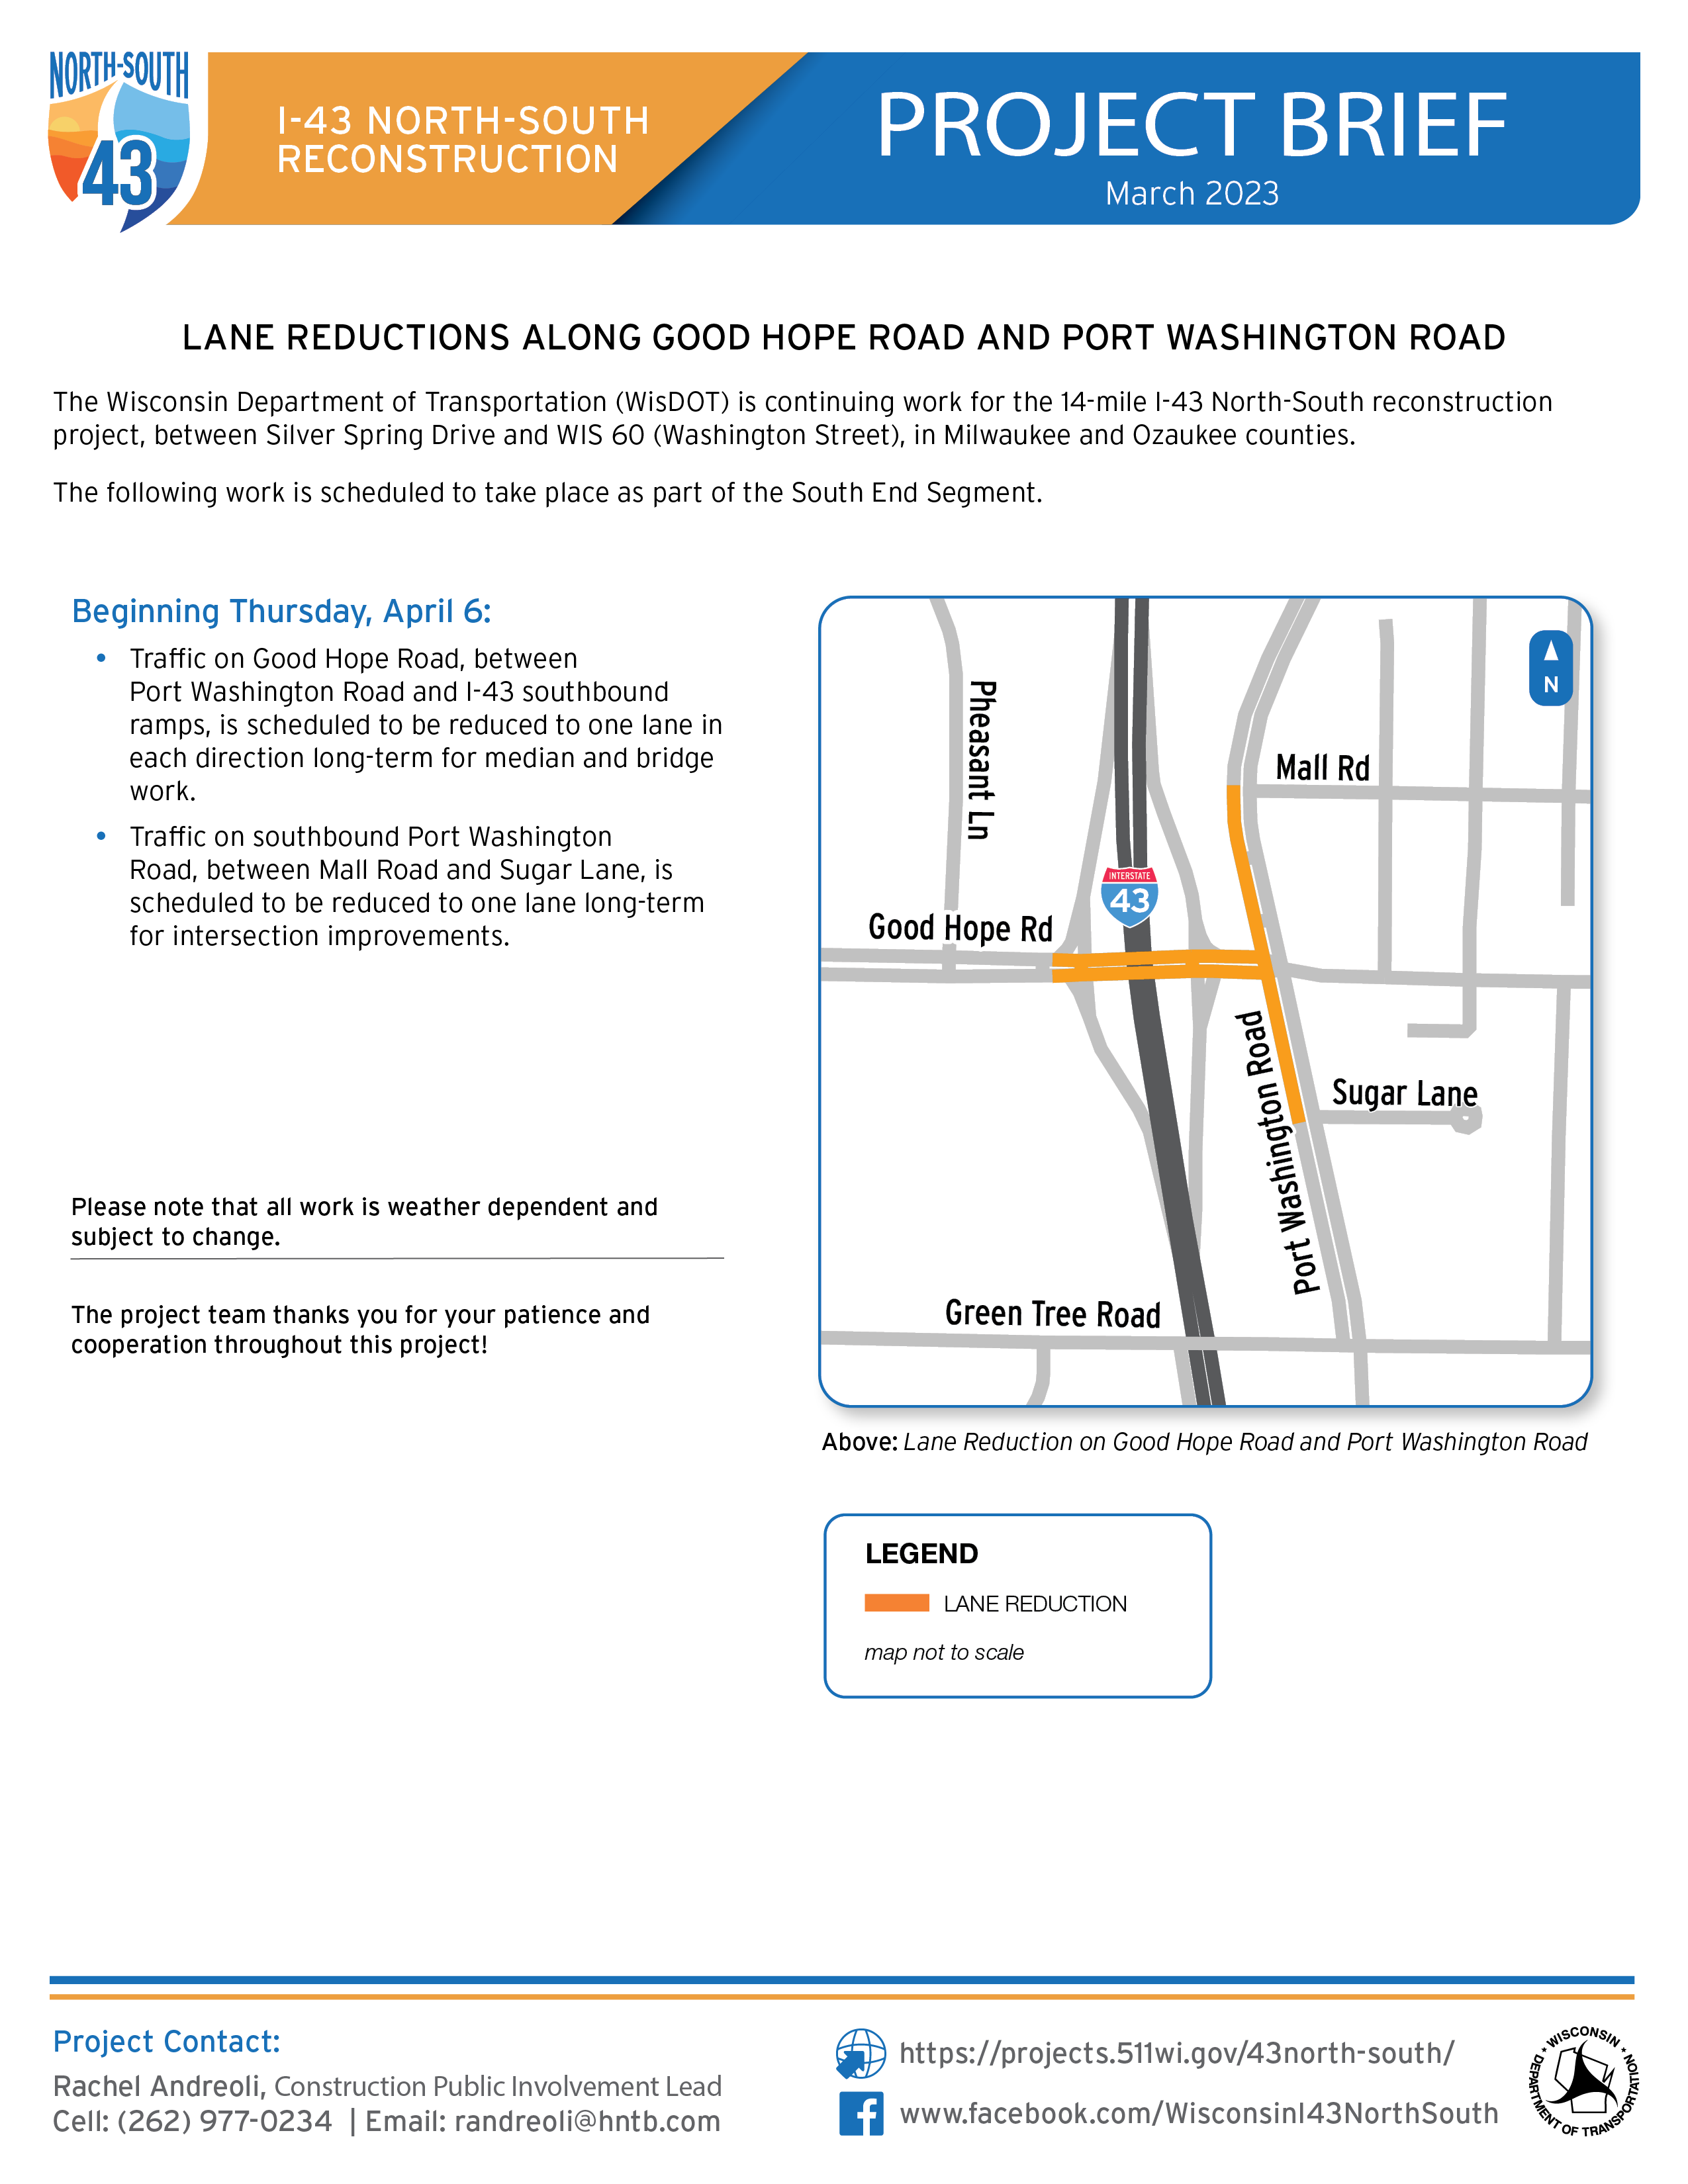 April 6, Lane Reductions Along Good Hope Road and Port Washington Road